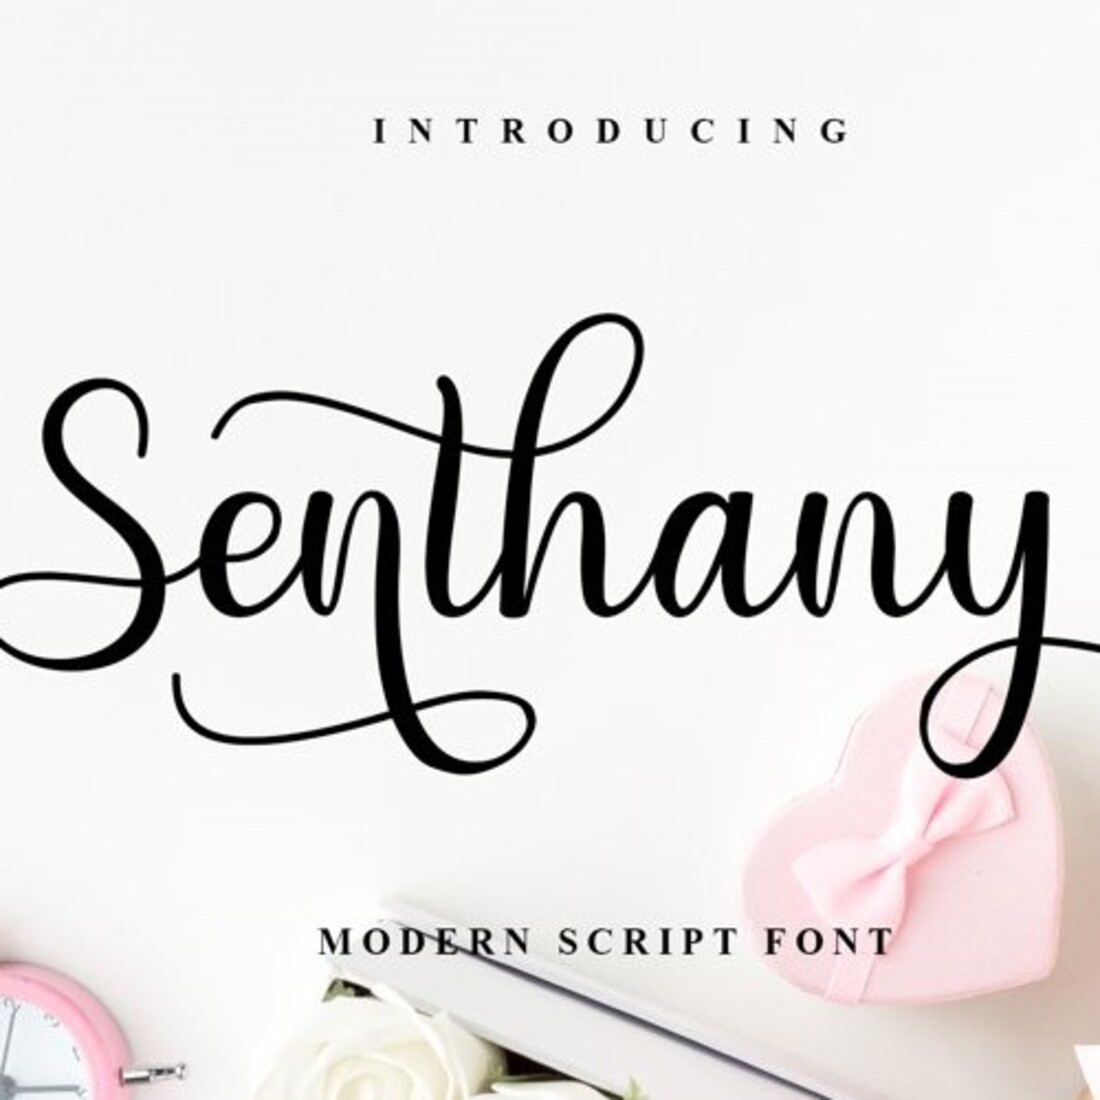 Senthany Modern Handwritten Font cover image.